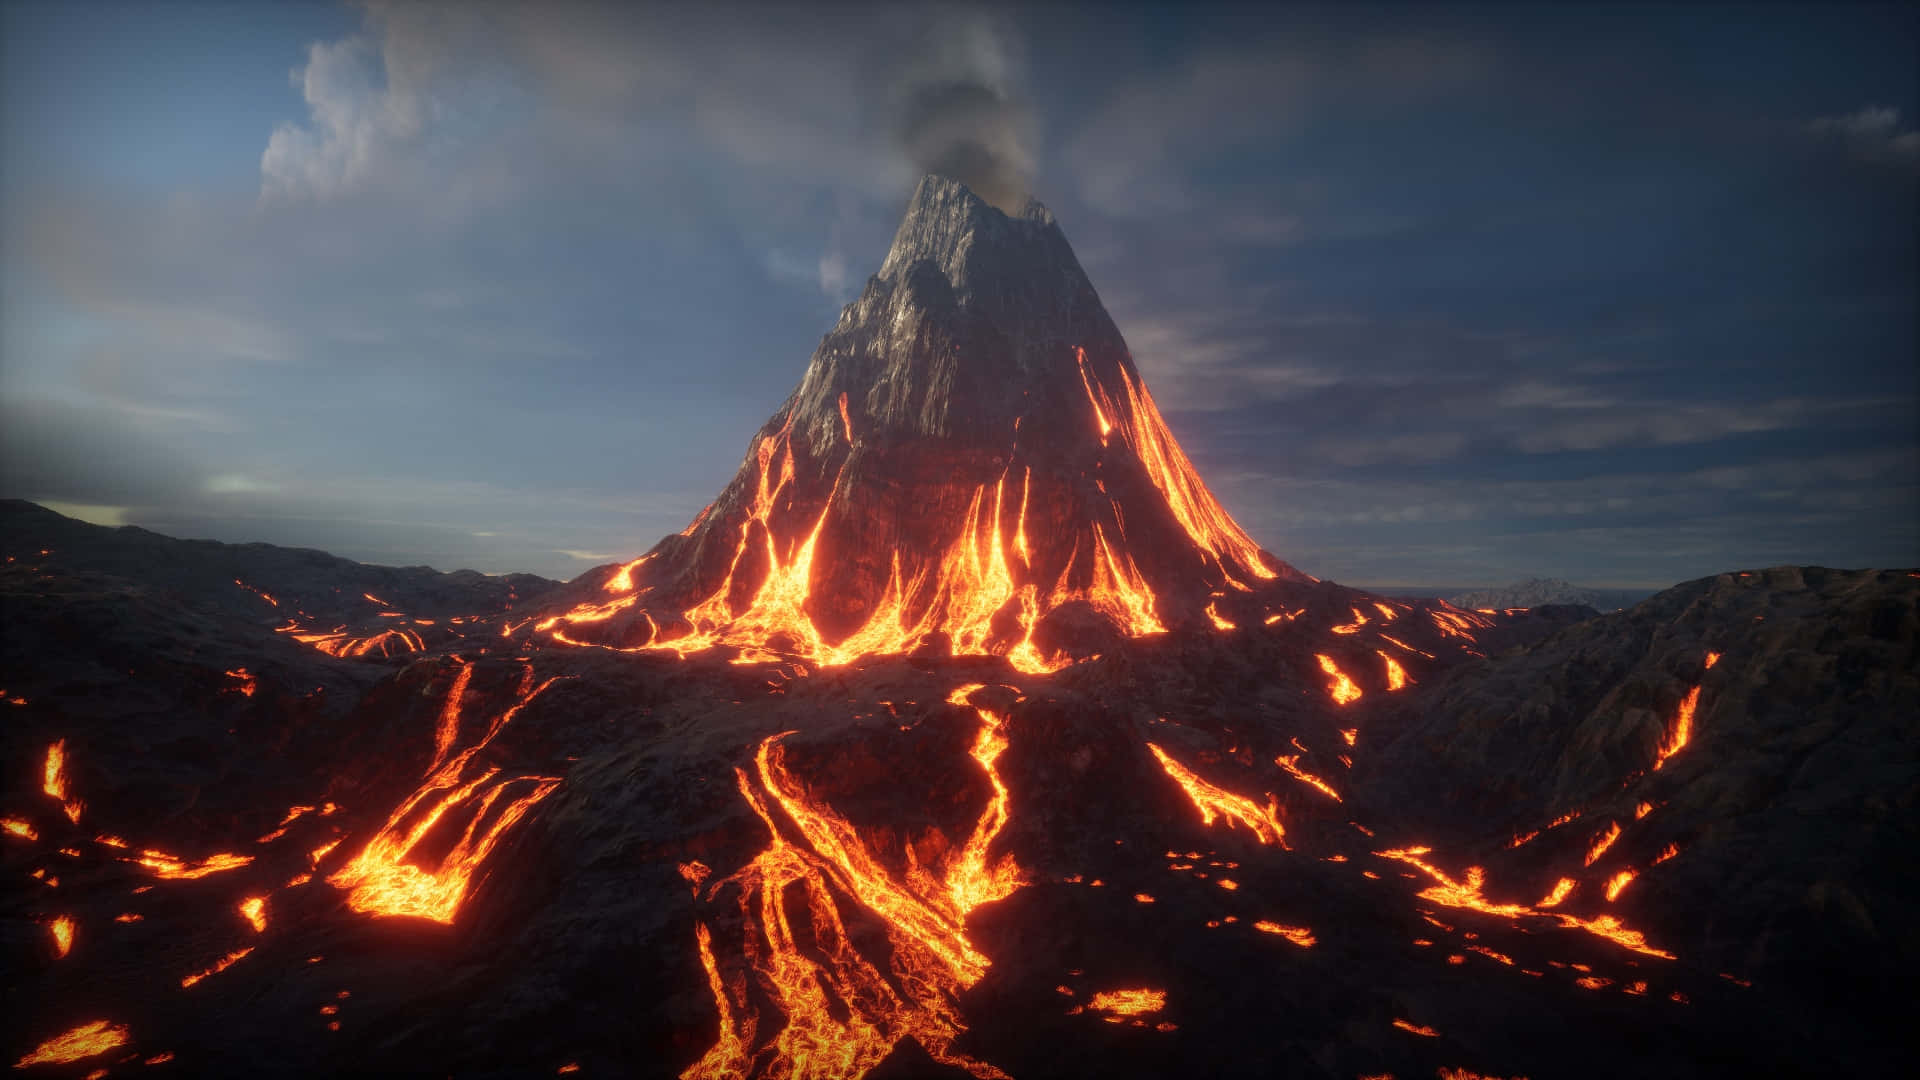 Erupting Volcano with Plume of Smoke